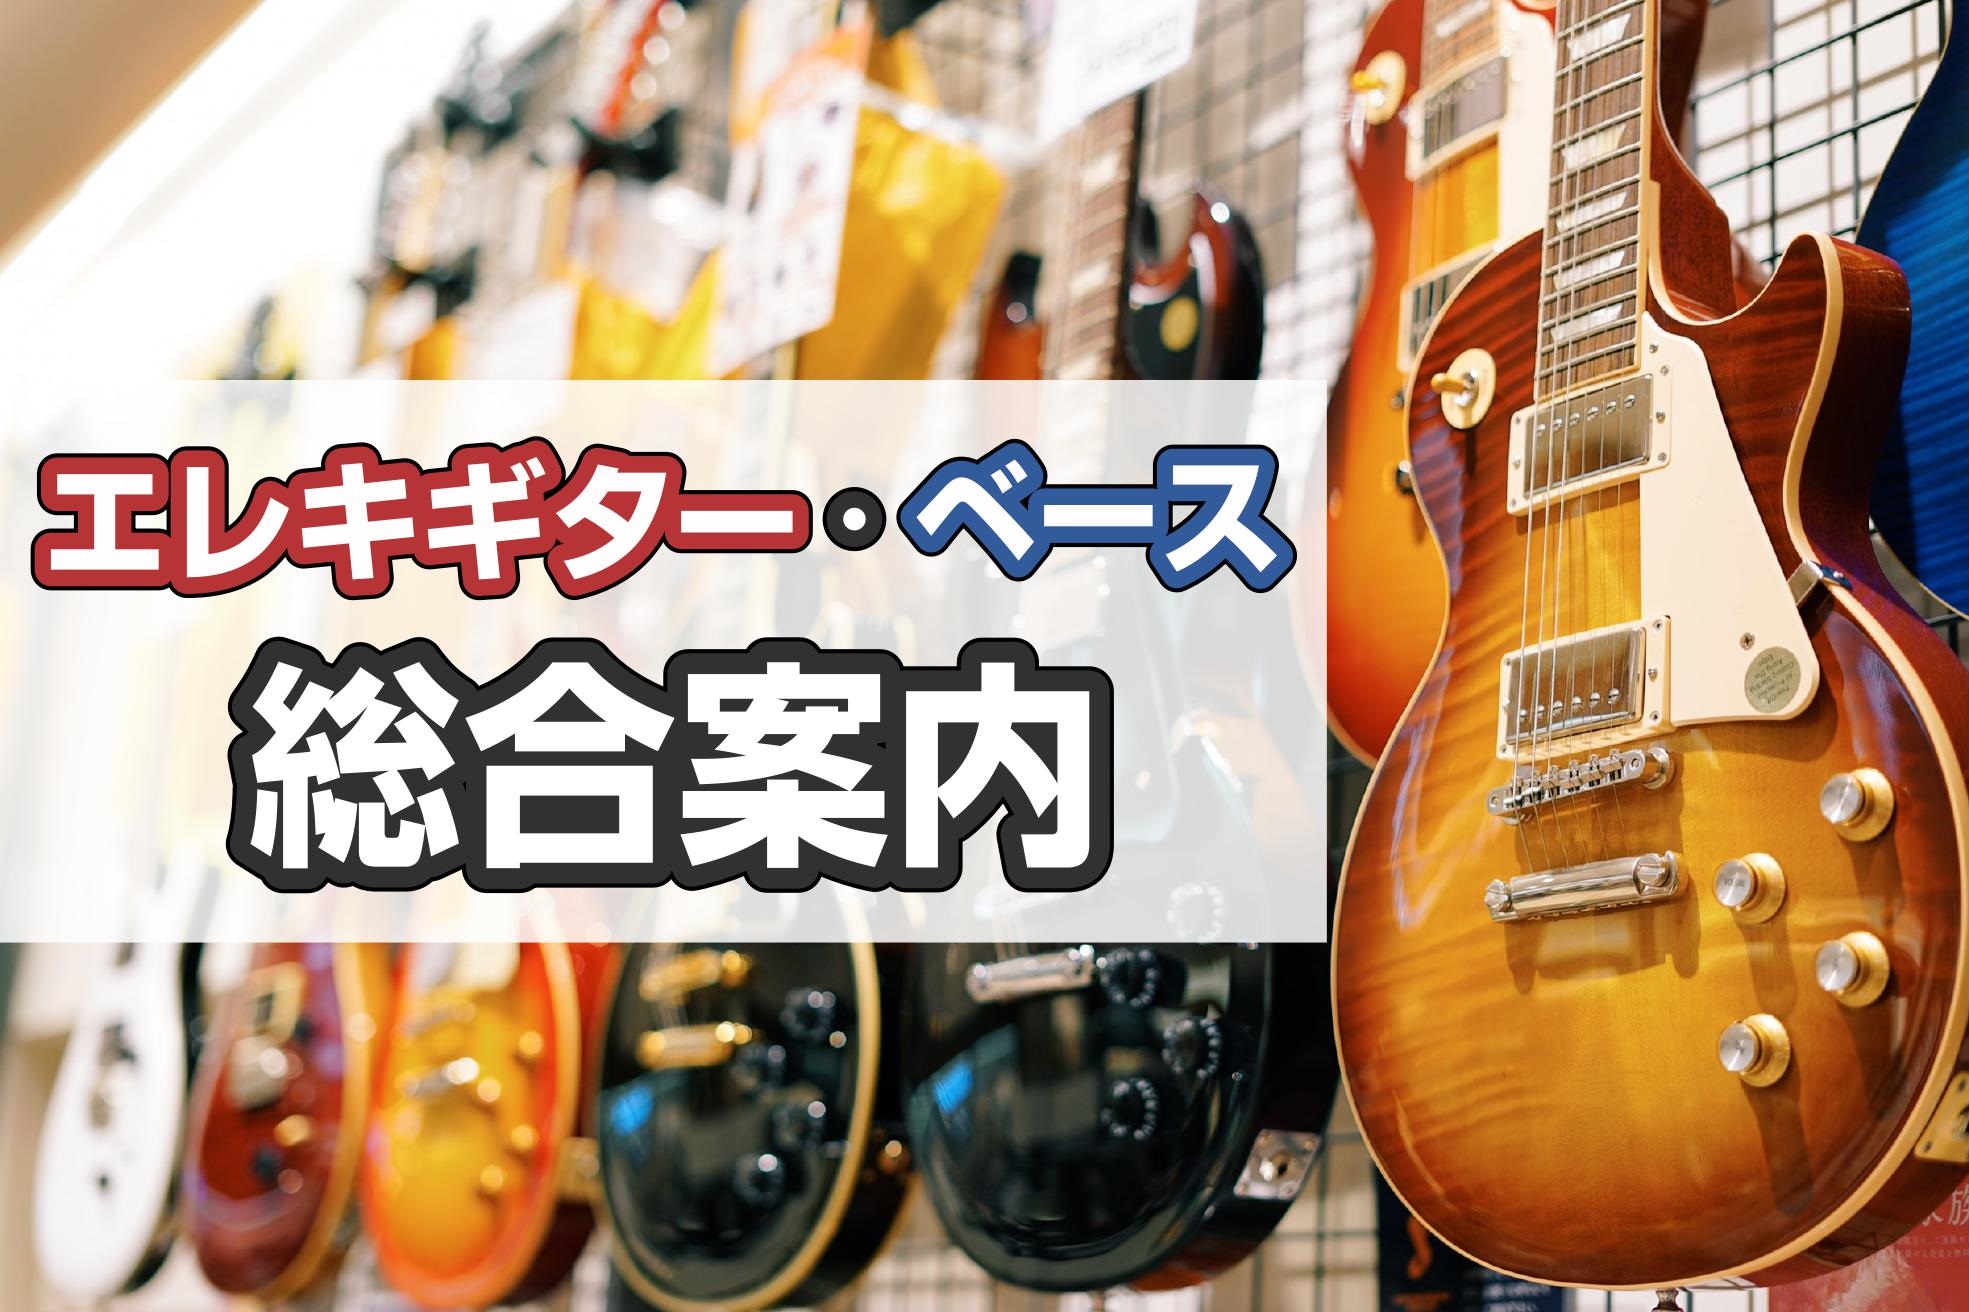 [https://www.shimamura.co.jp/shop/oodaka/information/20201224/6605::title=] *新規商品続々入荷中！ ===z=== 島村楽器イオンモール大高店では、様々なタイプのエレキギターやベース展示・販売しております。]]初めての方から […]